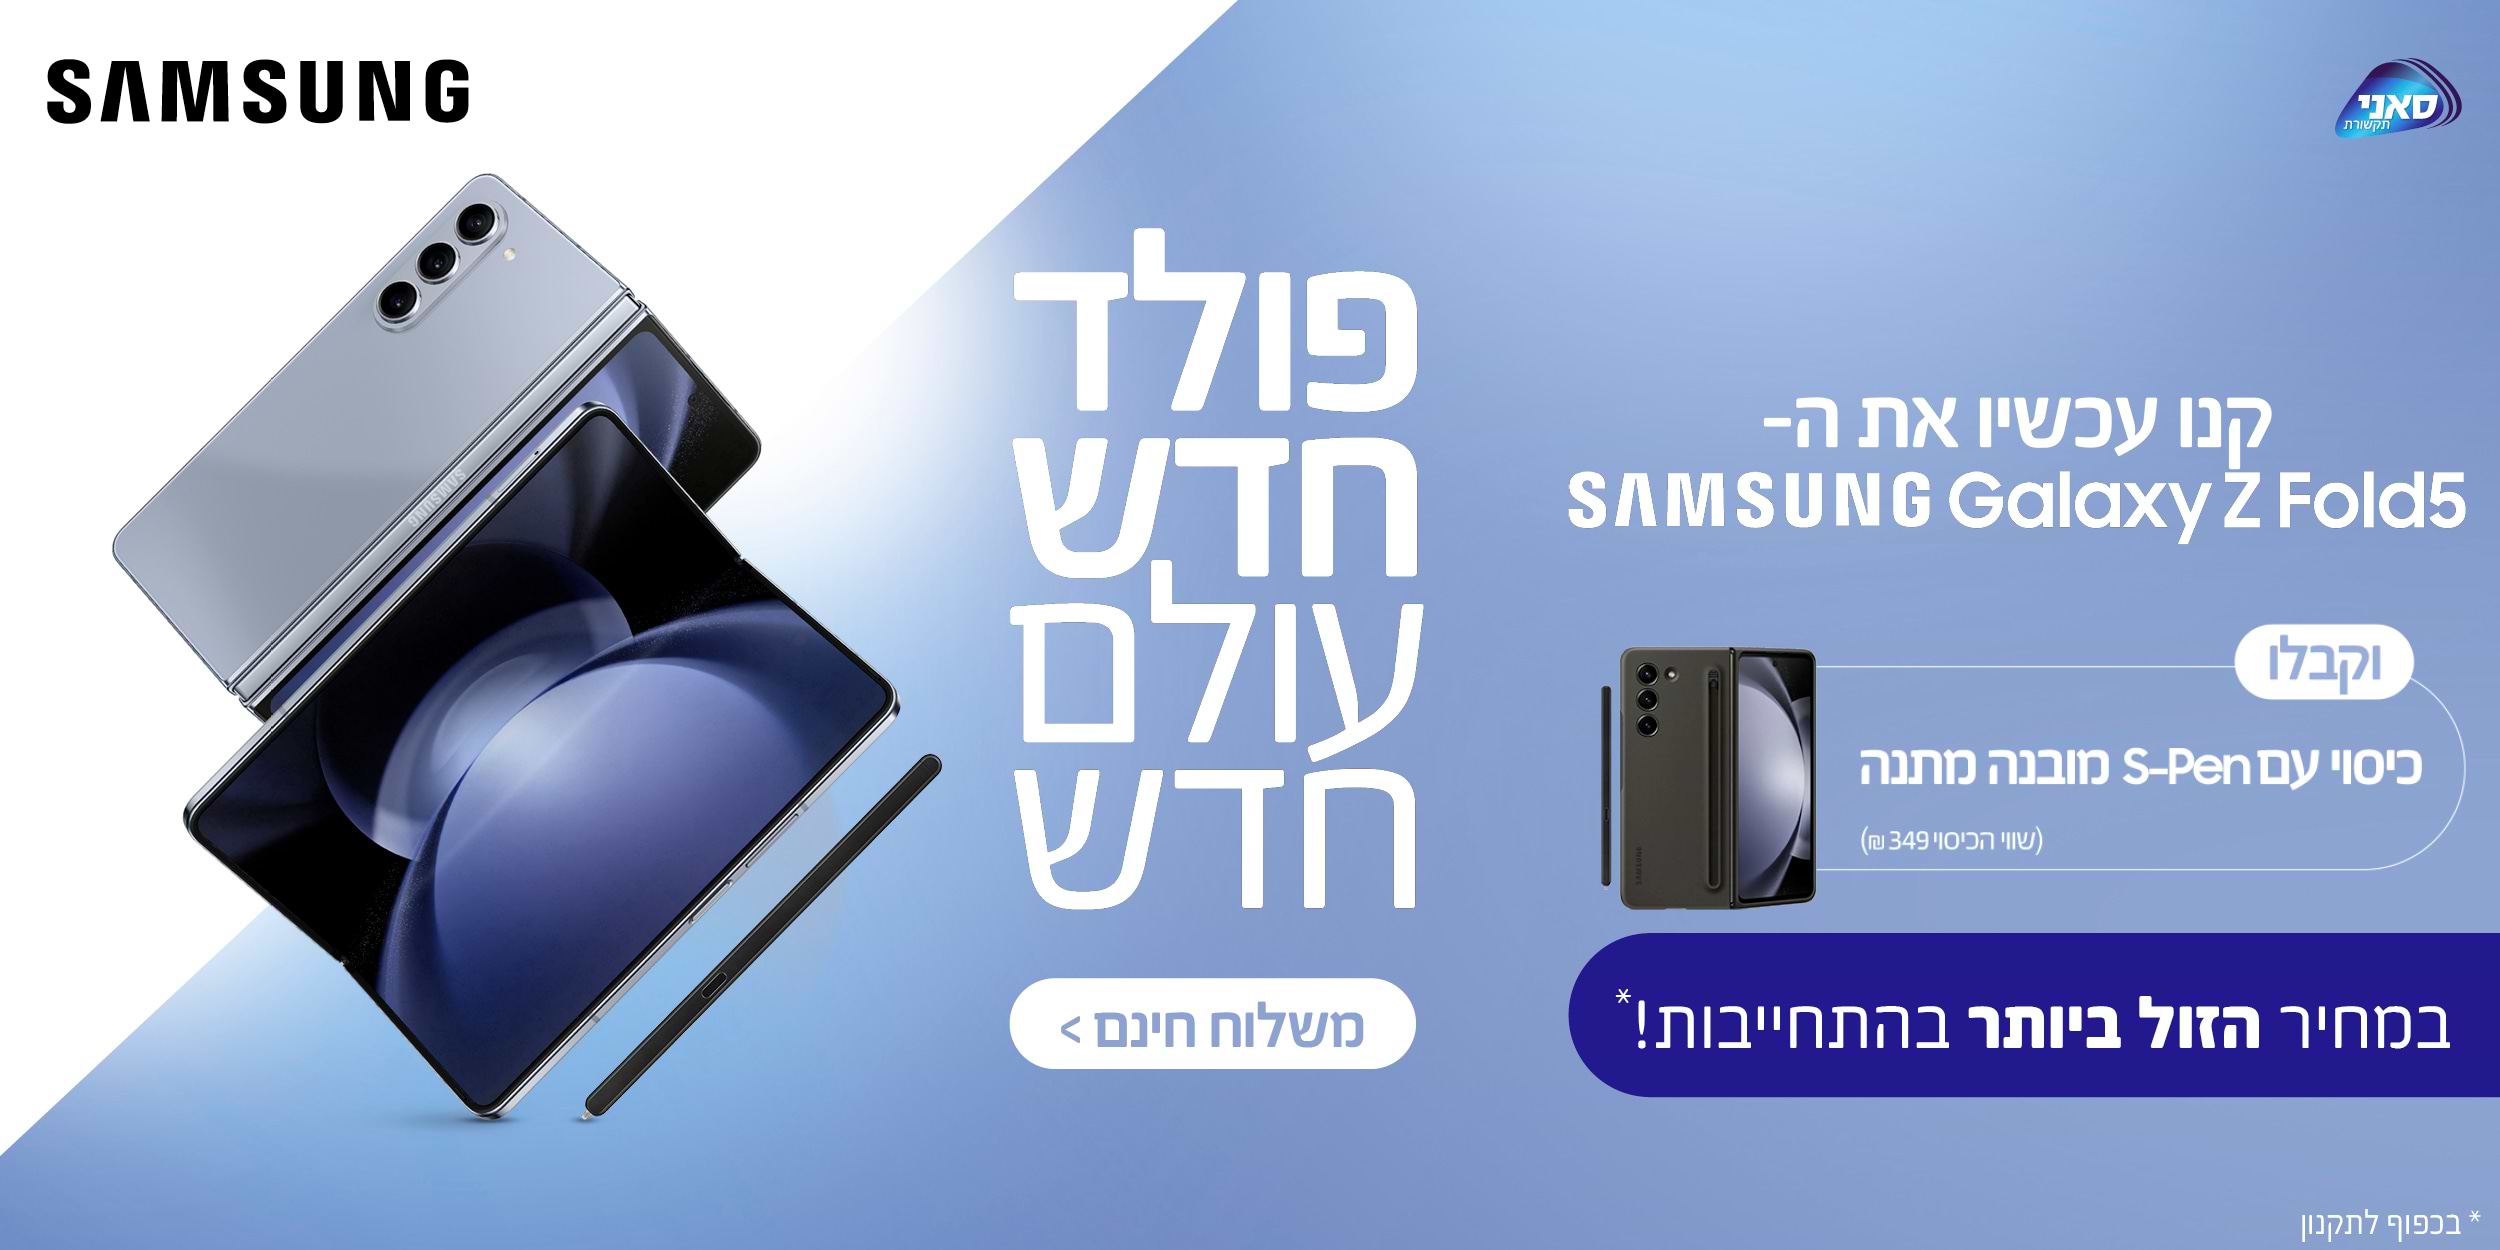 Samsung - קנו עכשיו את ה-Samsung Galaxy Z Fold5 וקבלו כיסוי עם S-Pen ובנה מתנה שווי הכיסוי 649 ש